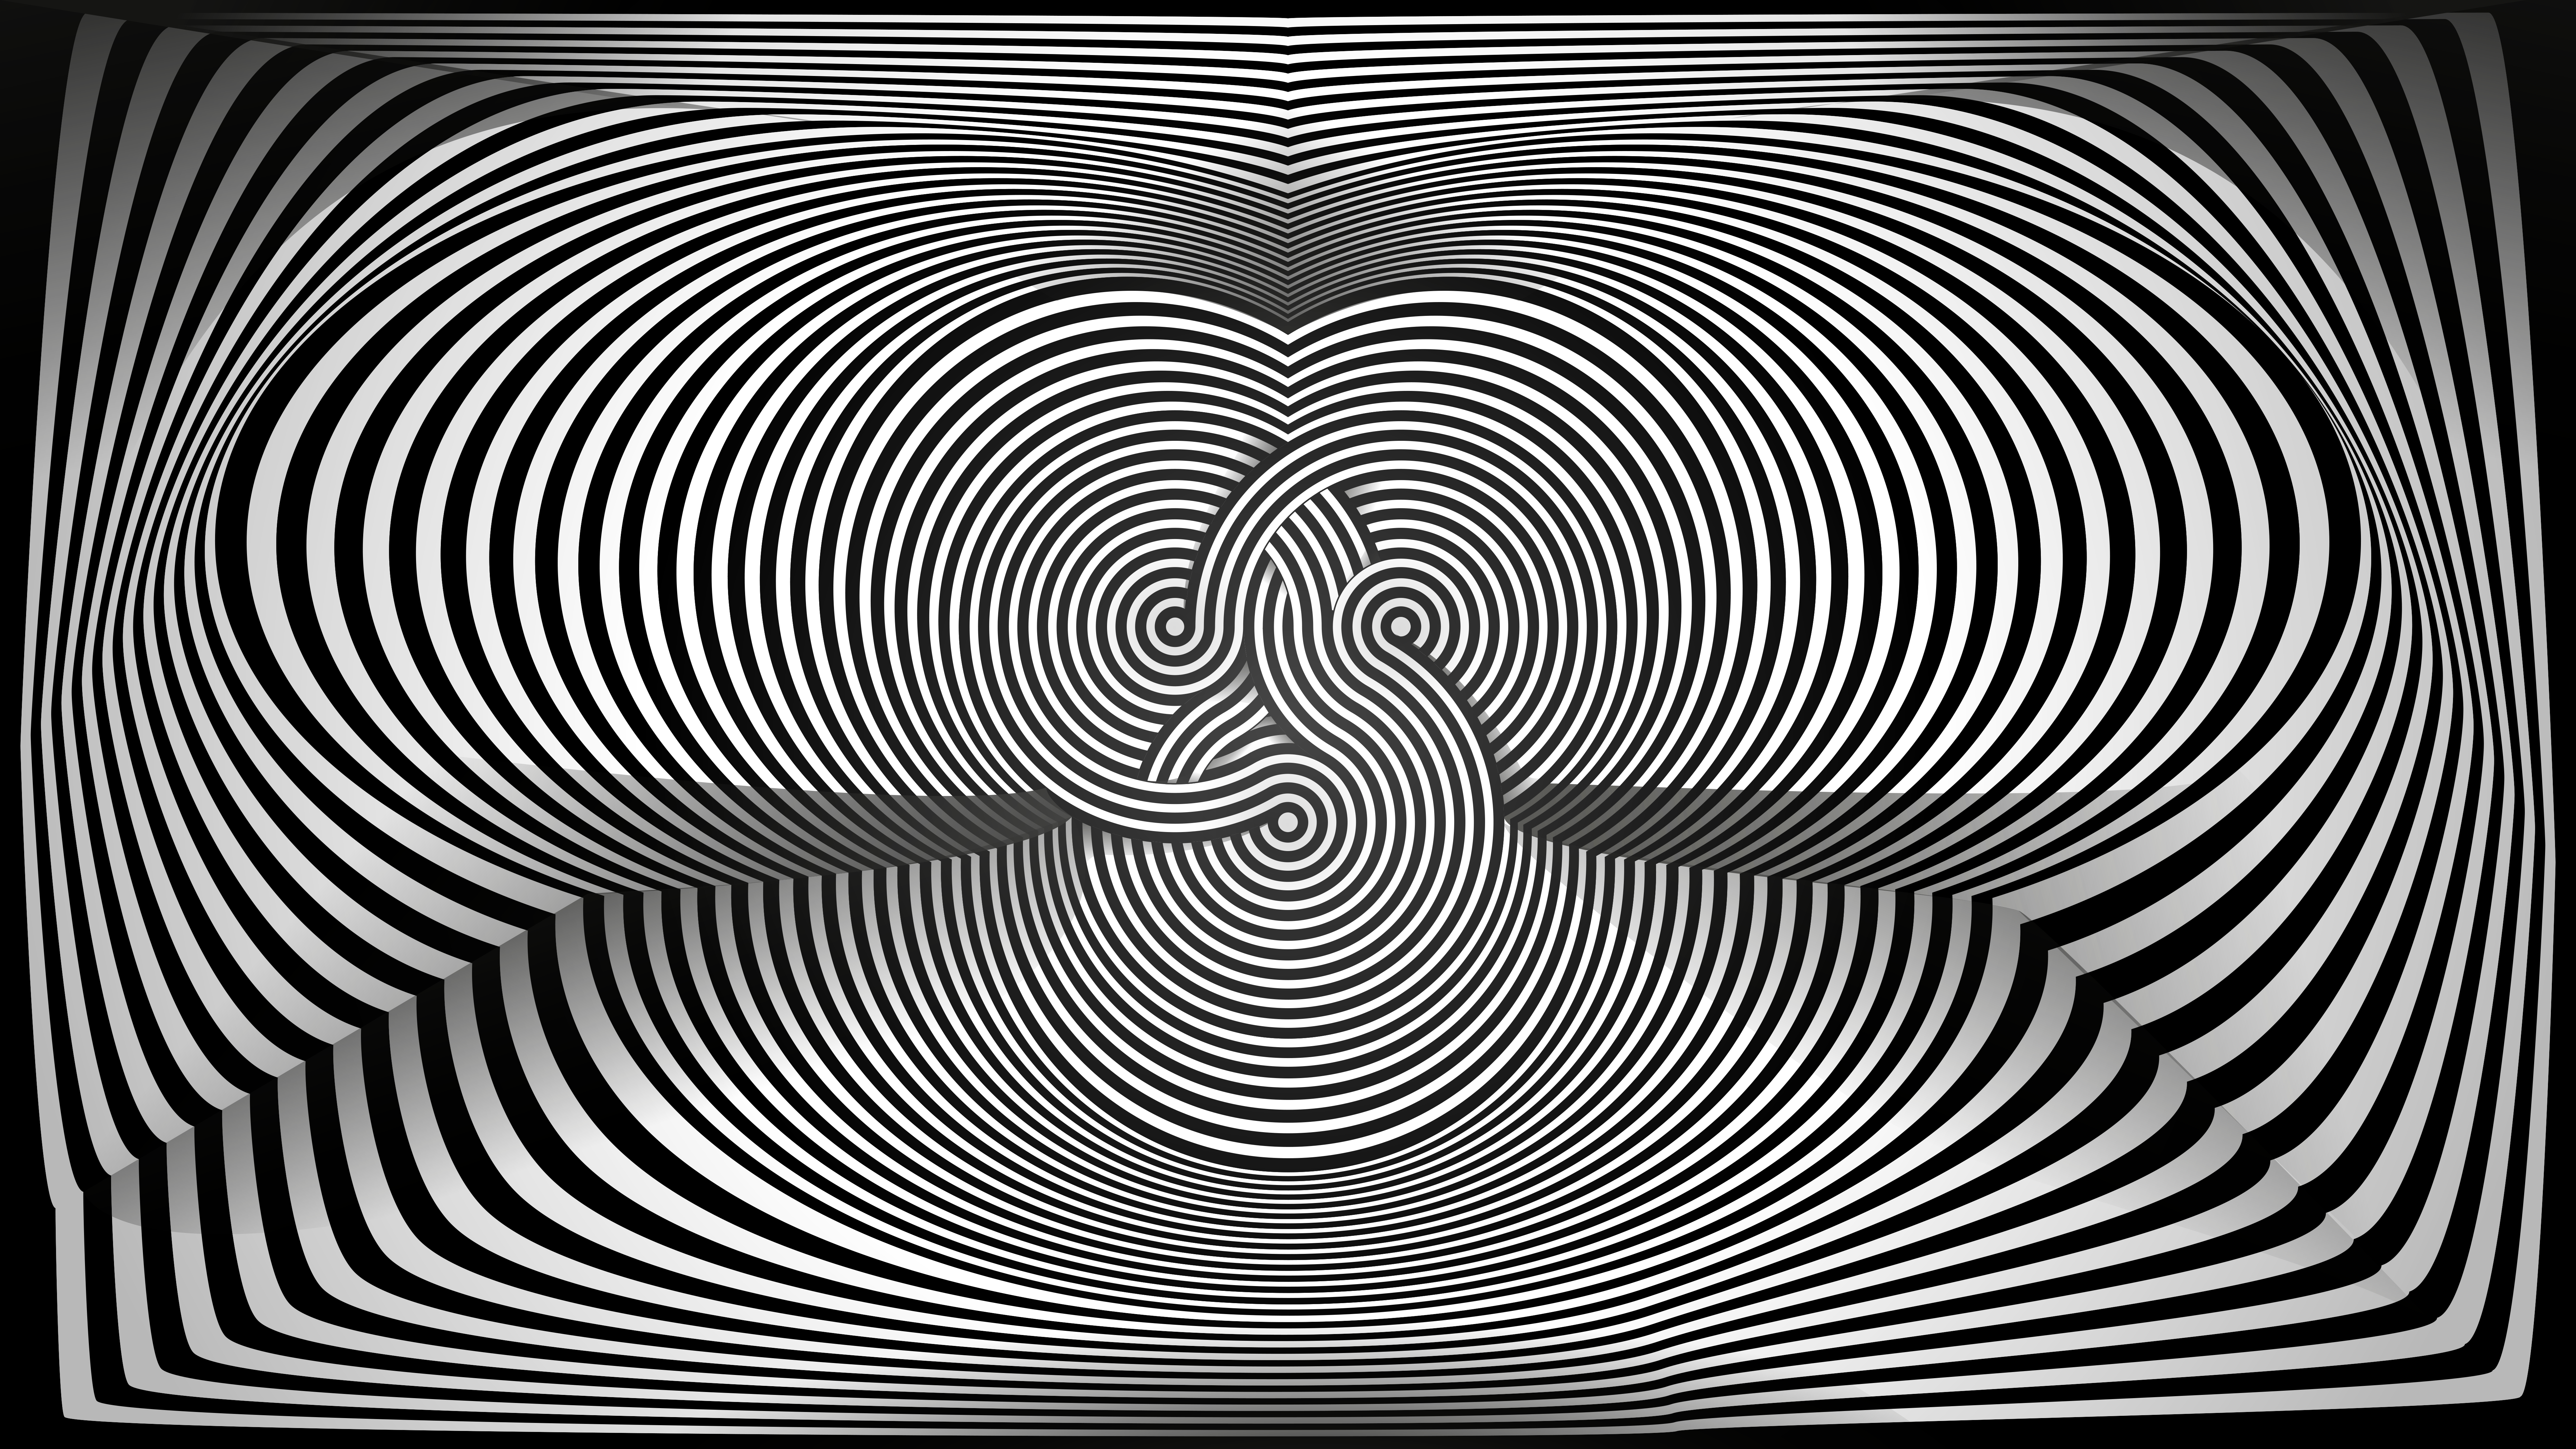 General 8000x4500 optical illusion optical art black white vector digital art